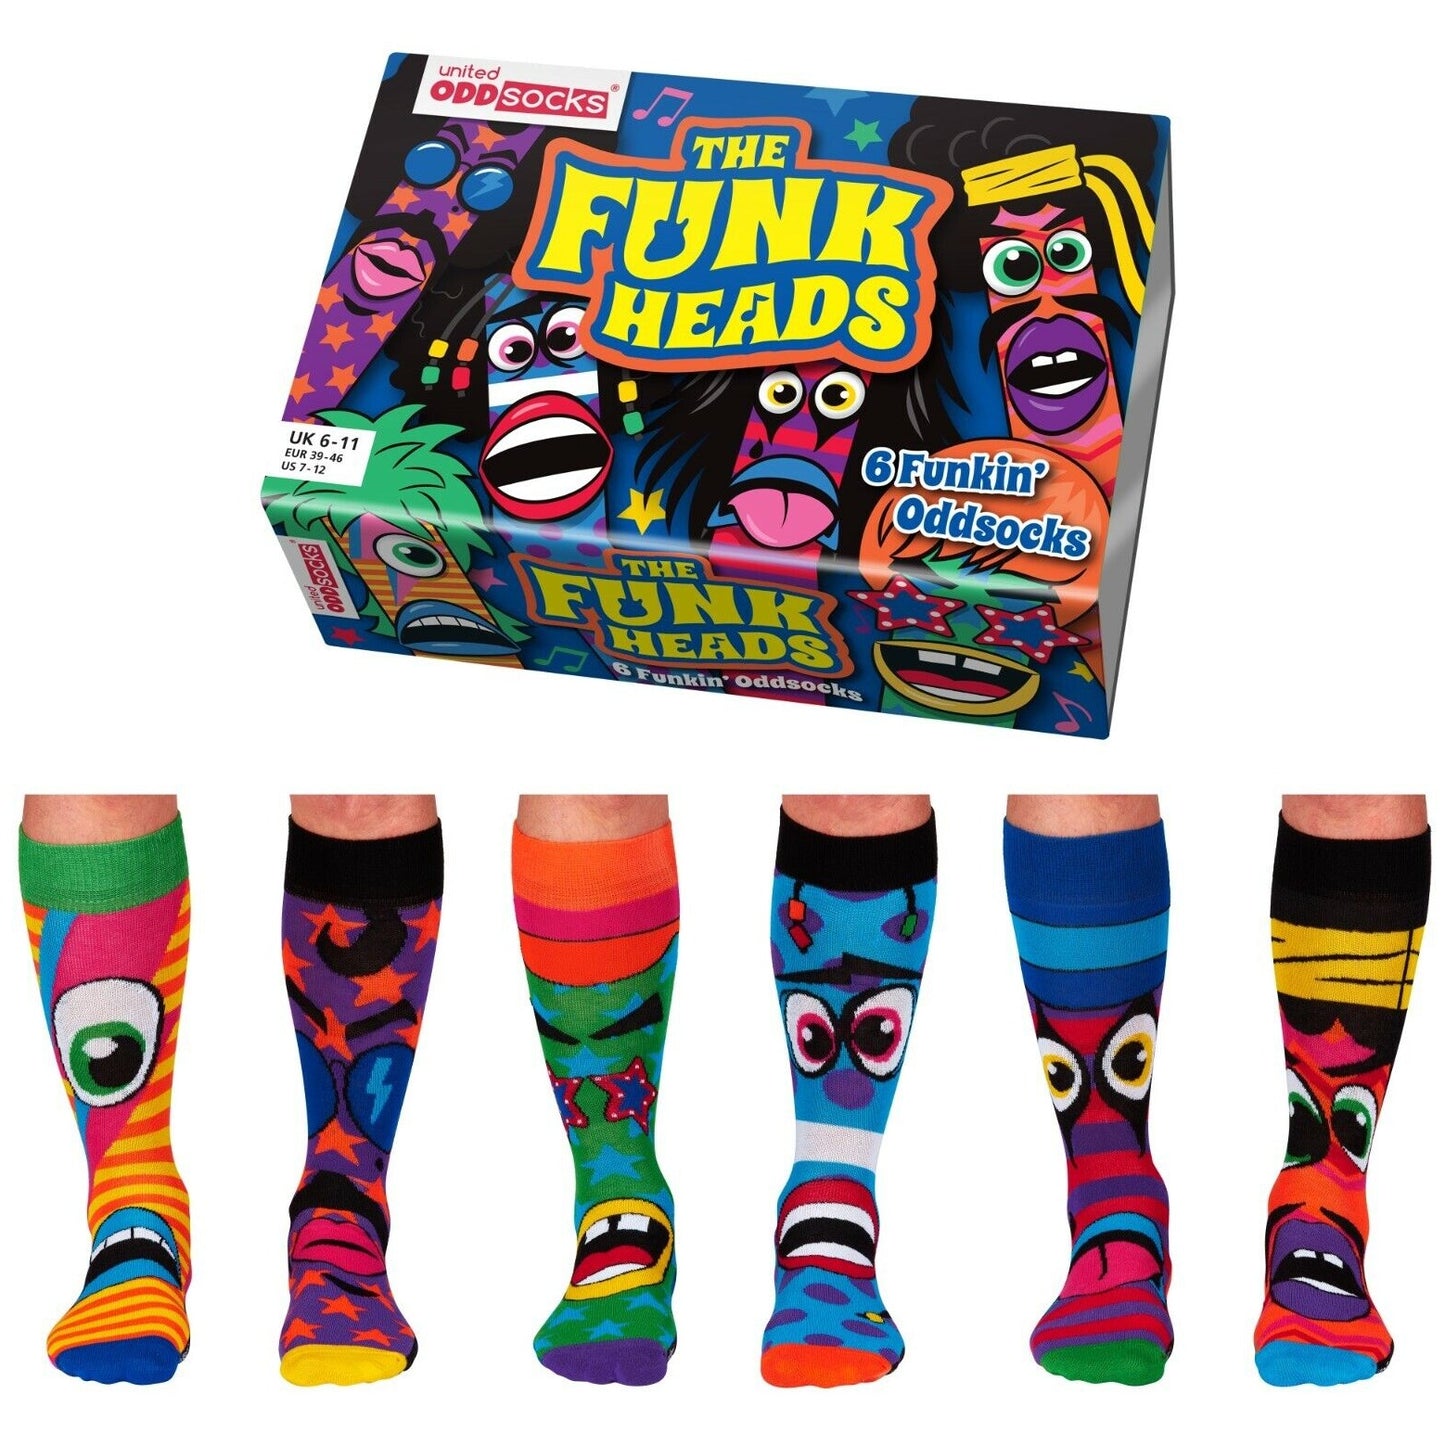 United Oddsocks The Funk Heads 6 Odd Socks Gift Box - Mens Size 6-11